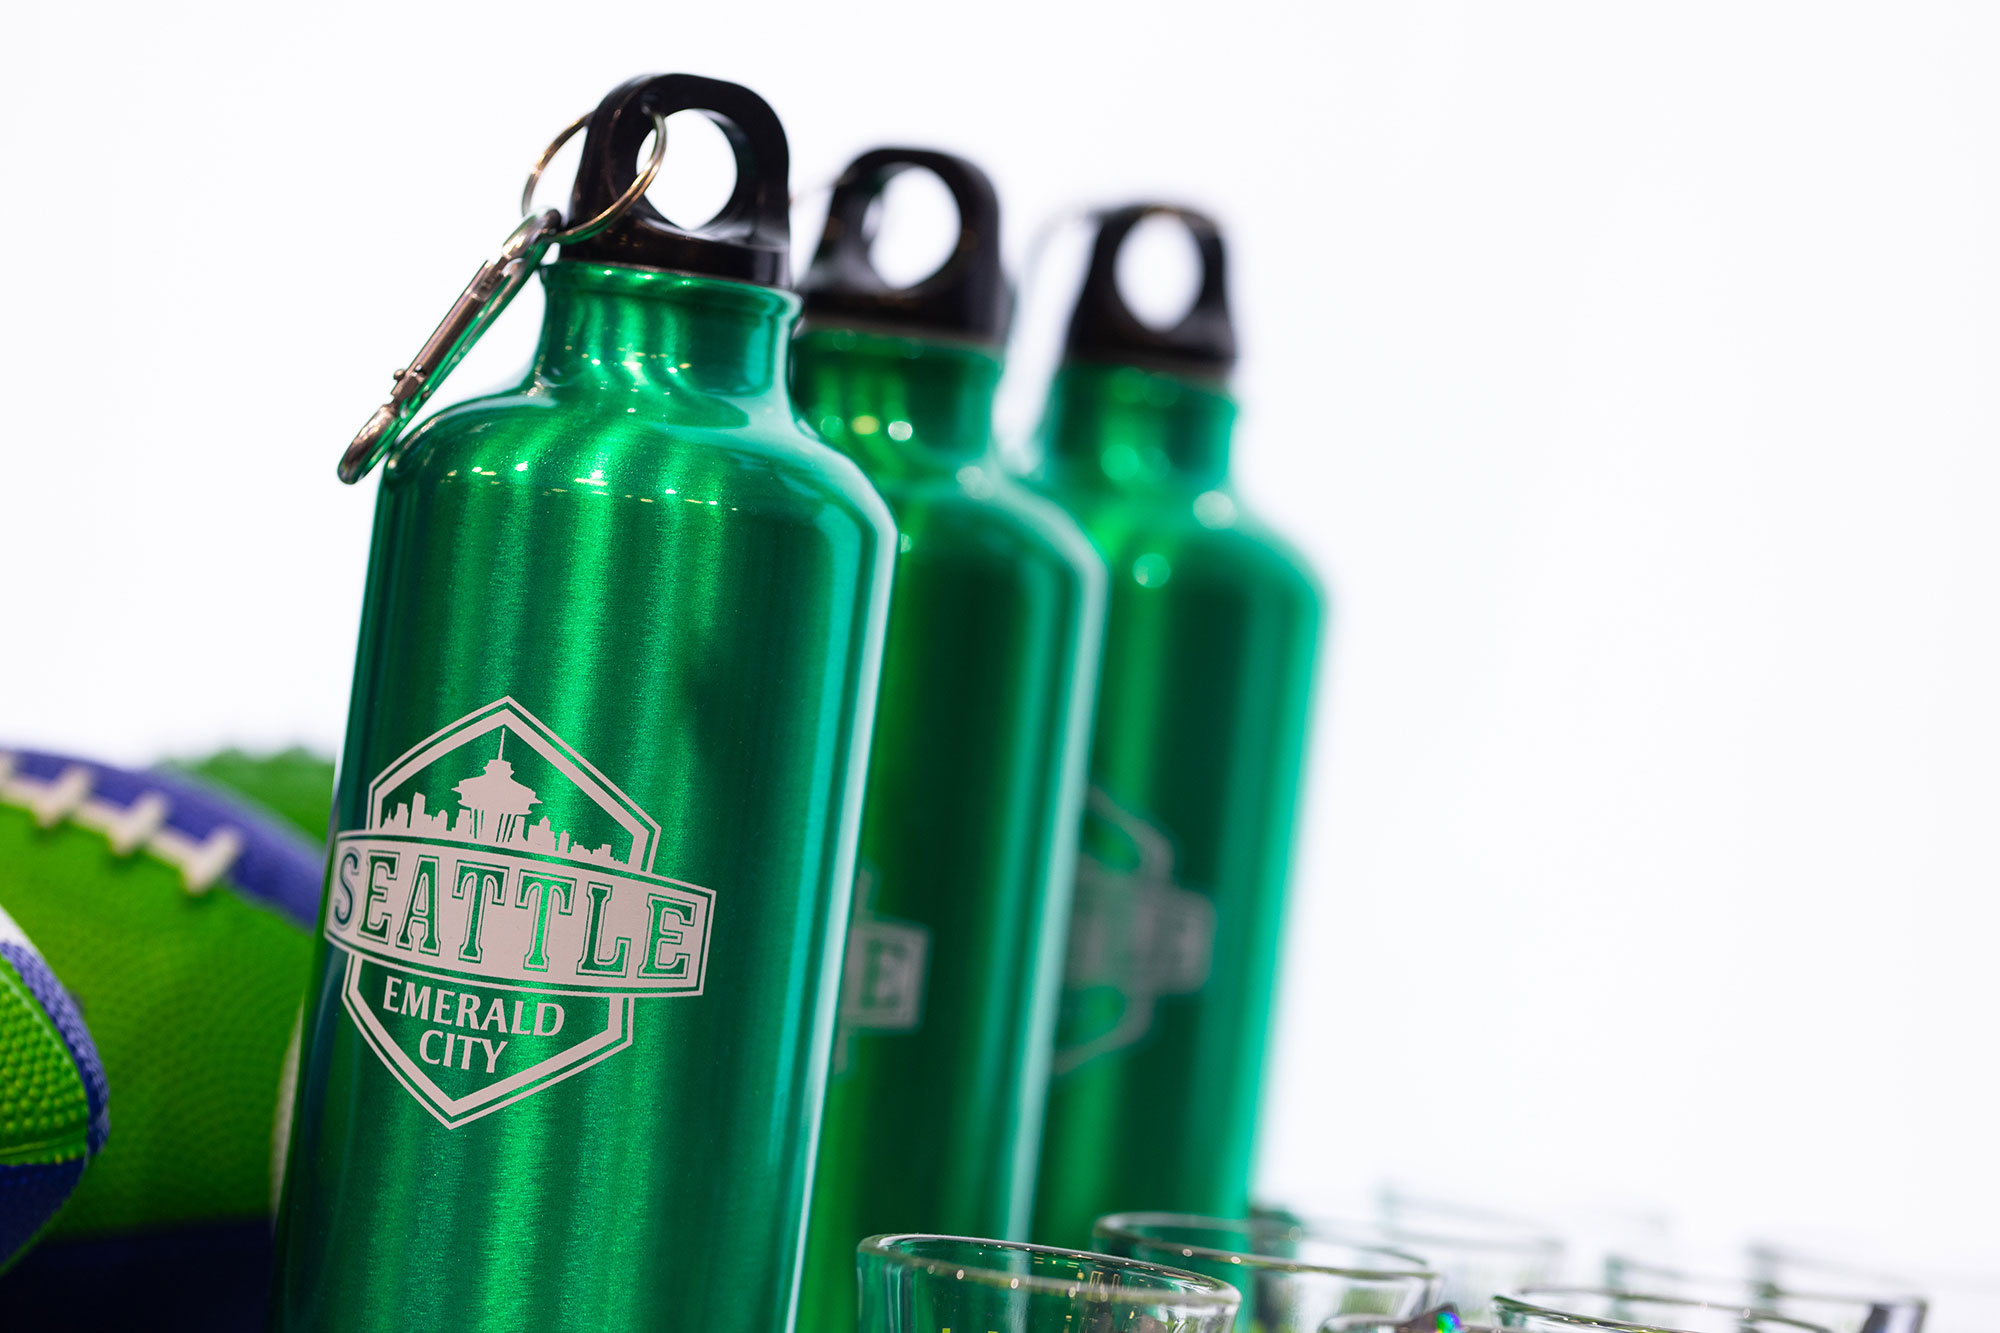 SEA Hudson Seattle Emerald City Water Bottles